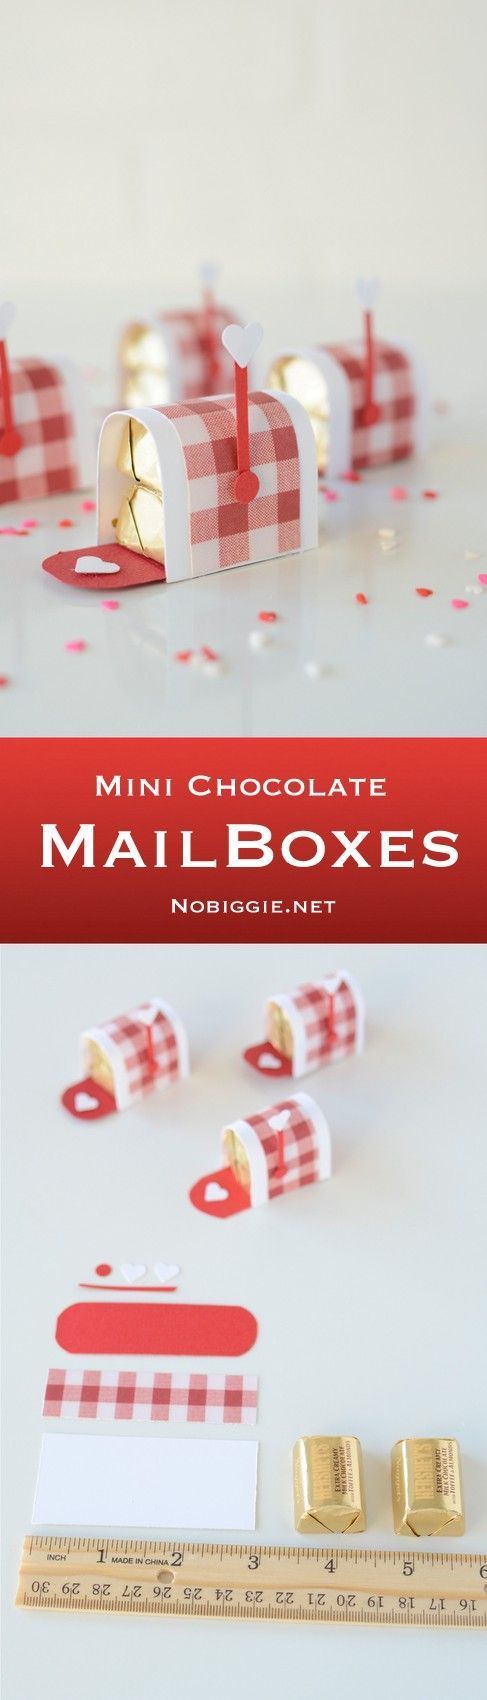 mini chocolate mailboxes | a Valentine's Day treat #valentinesideas